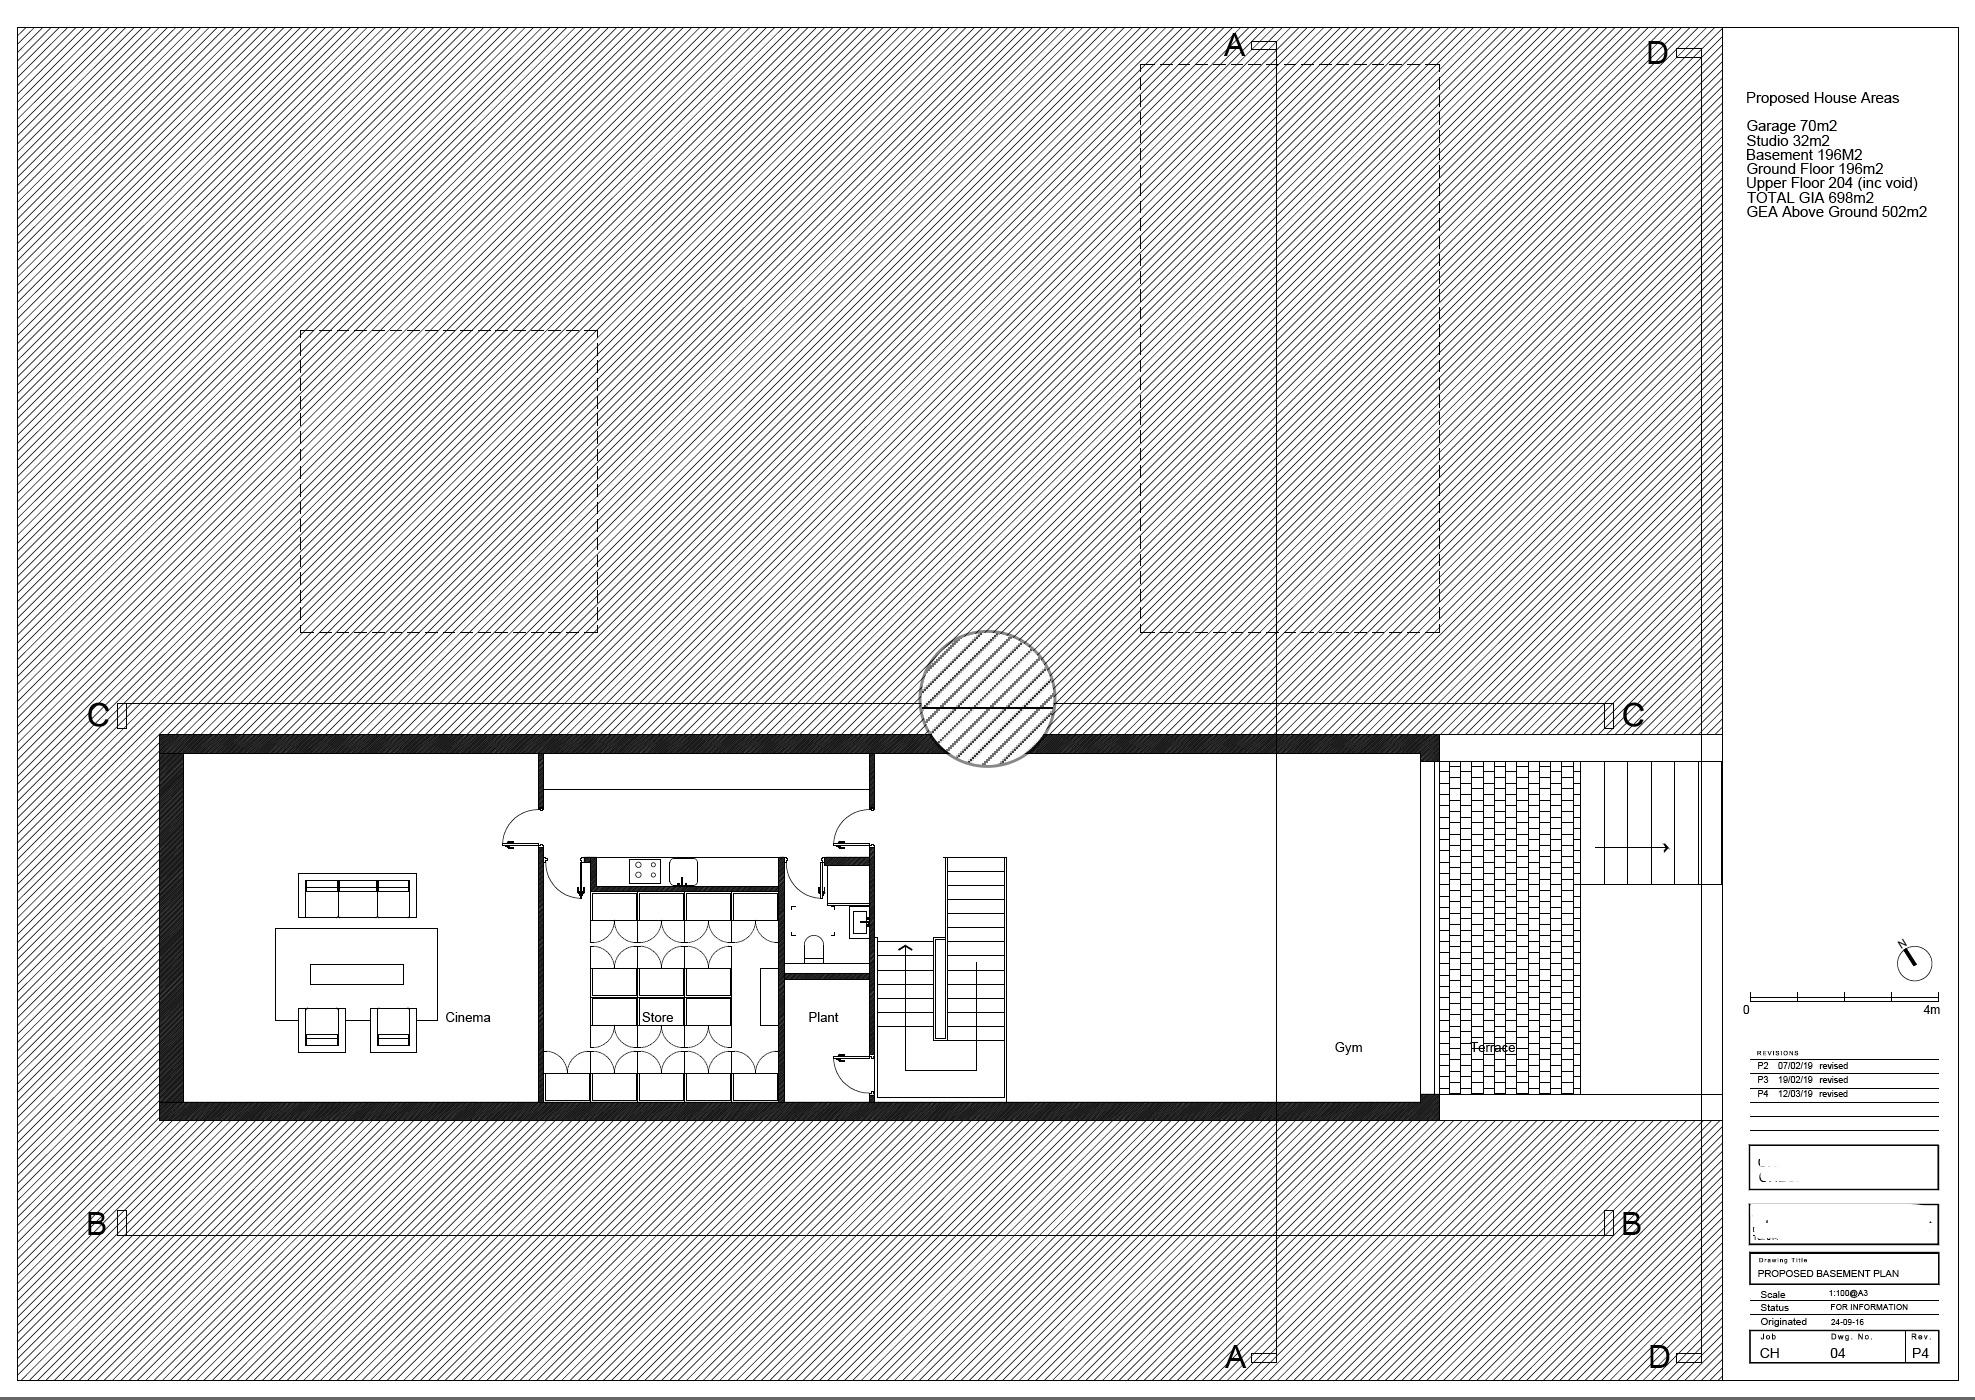 New House Plans - New House & Self Build Design - BuildHub.org.uk